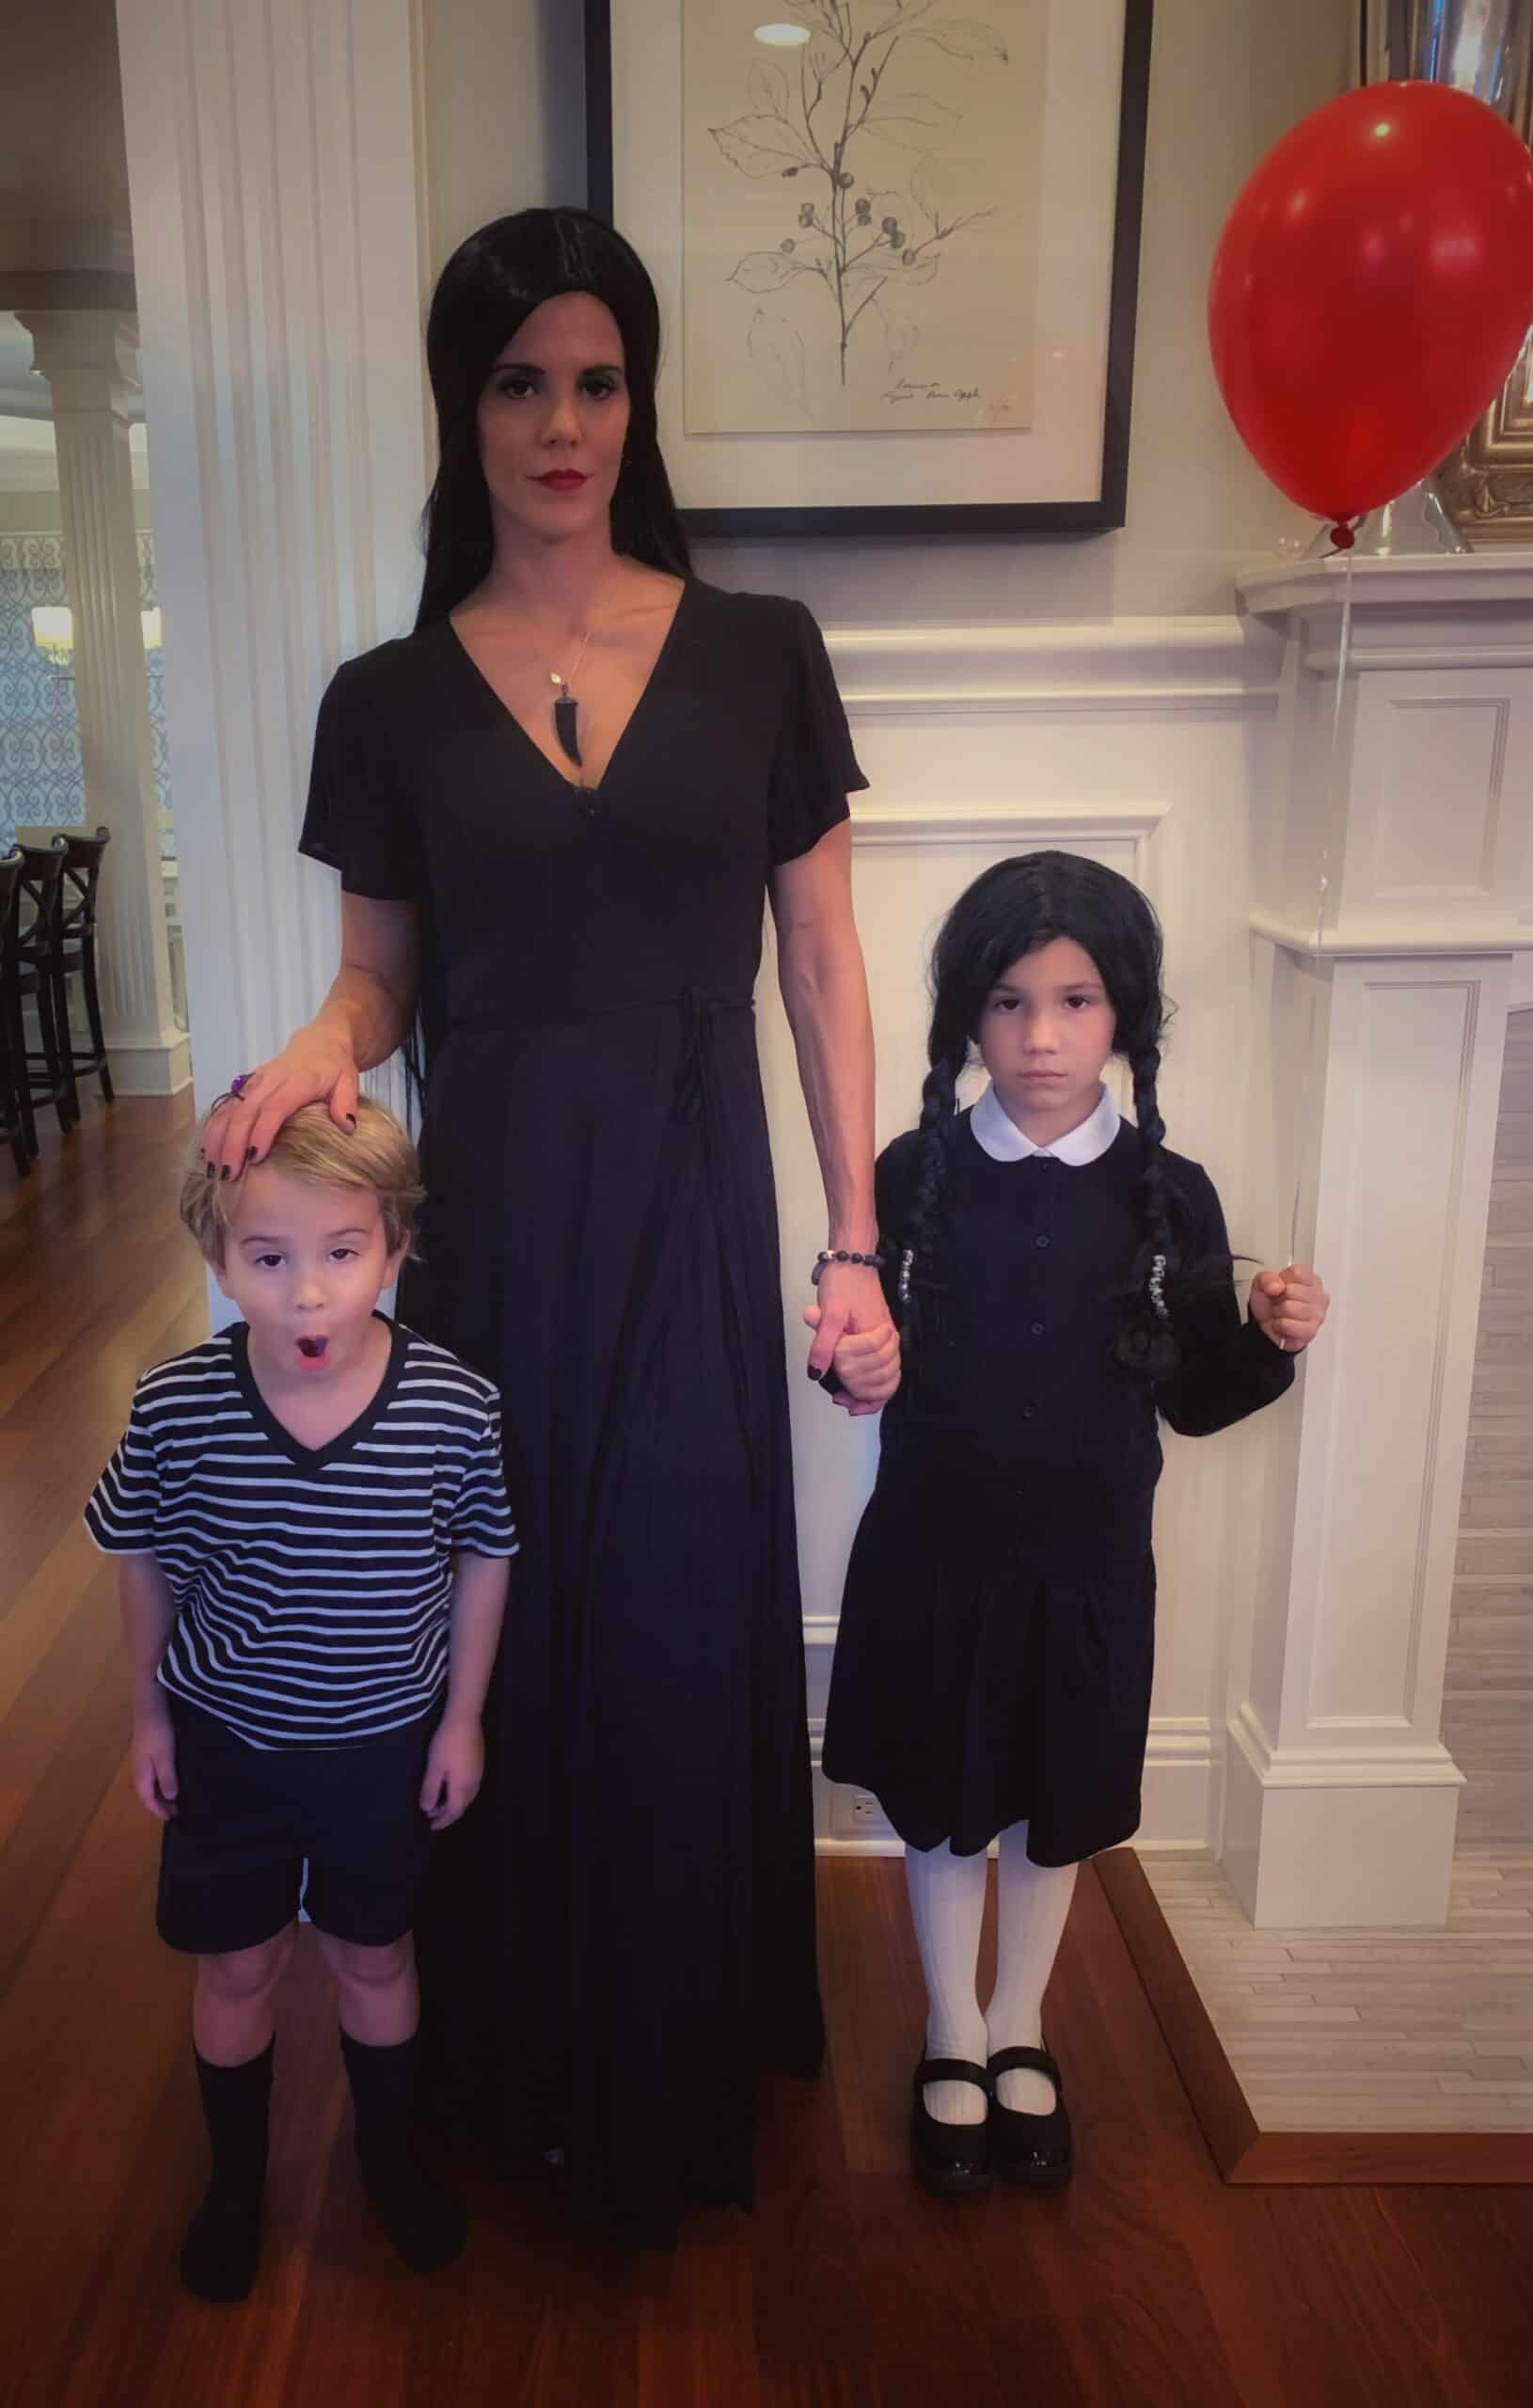 Addams Family DIY Halloween Costume by Tara Payor